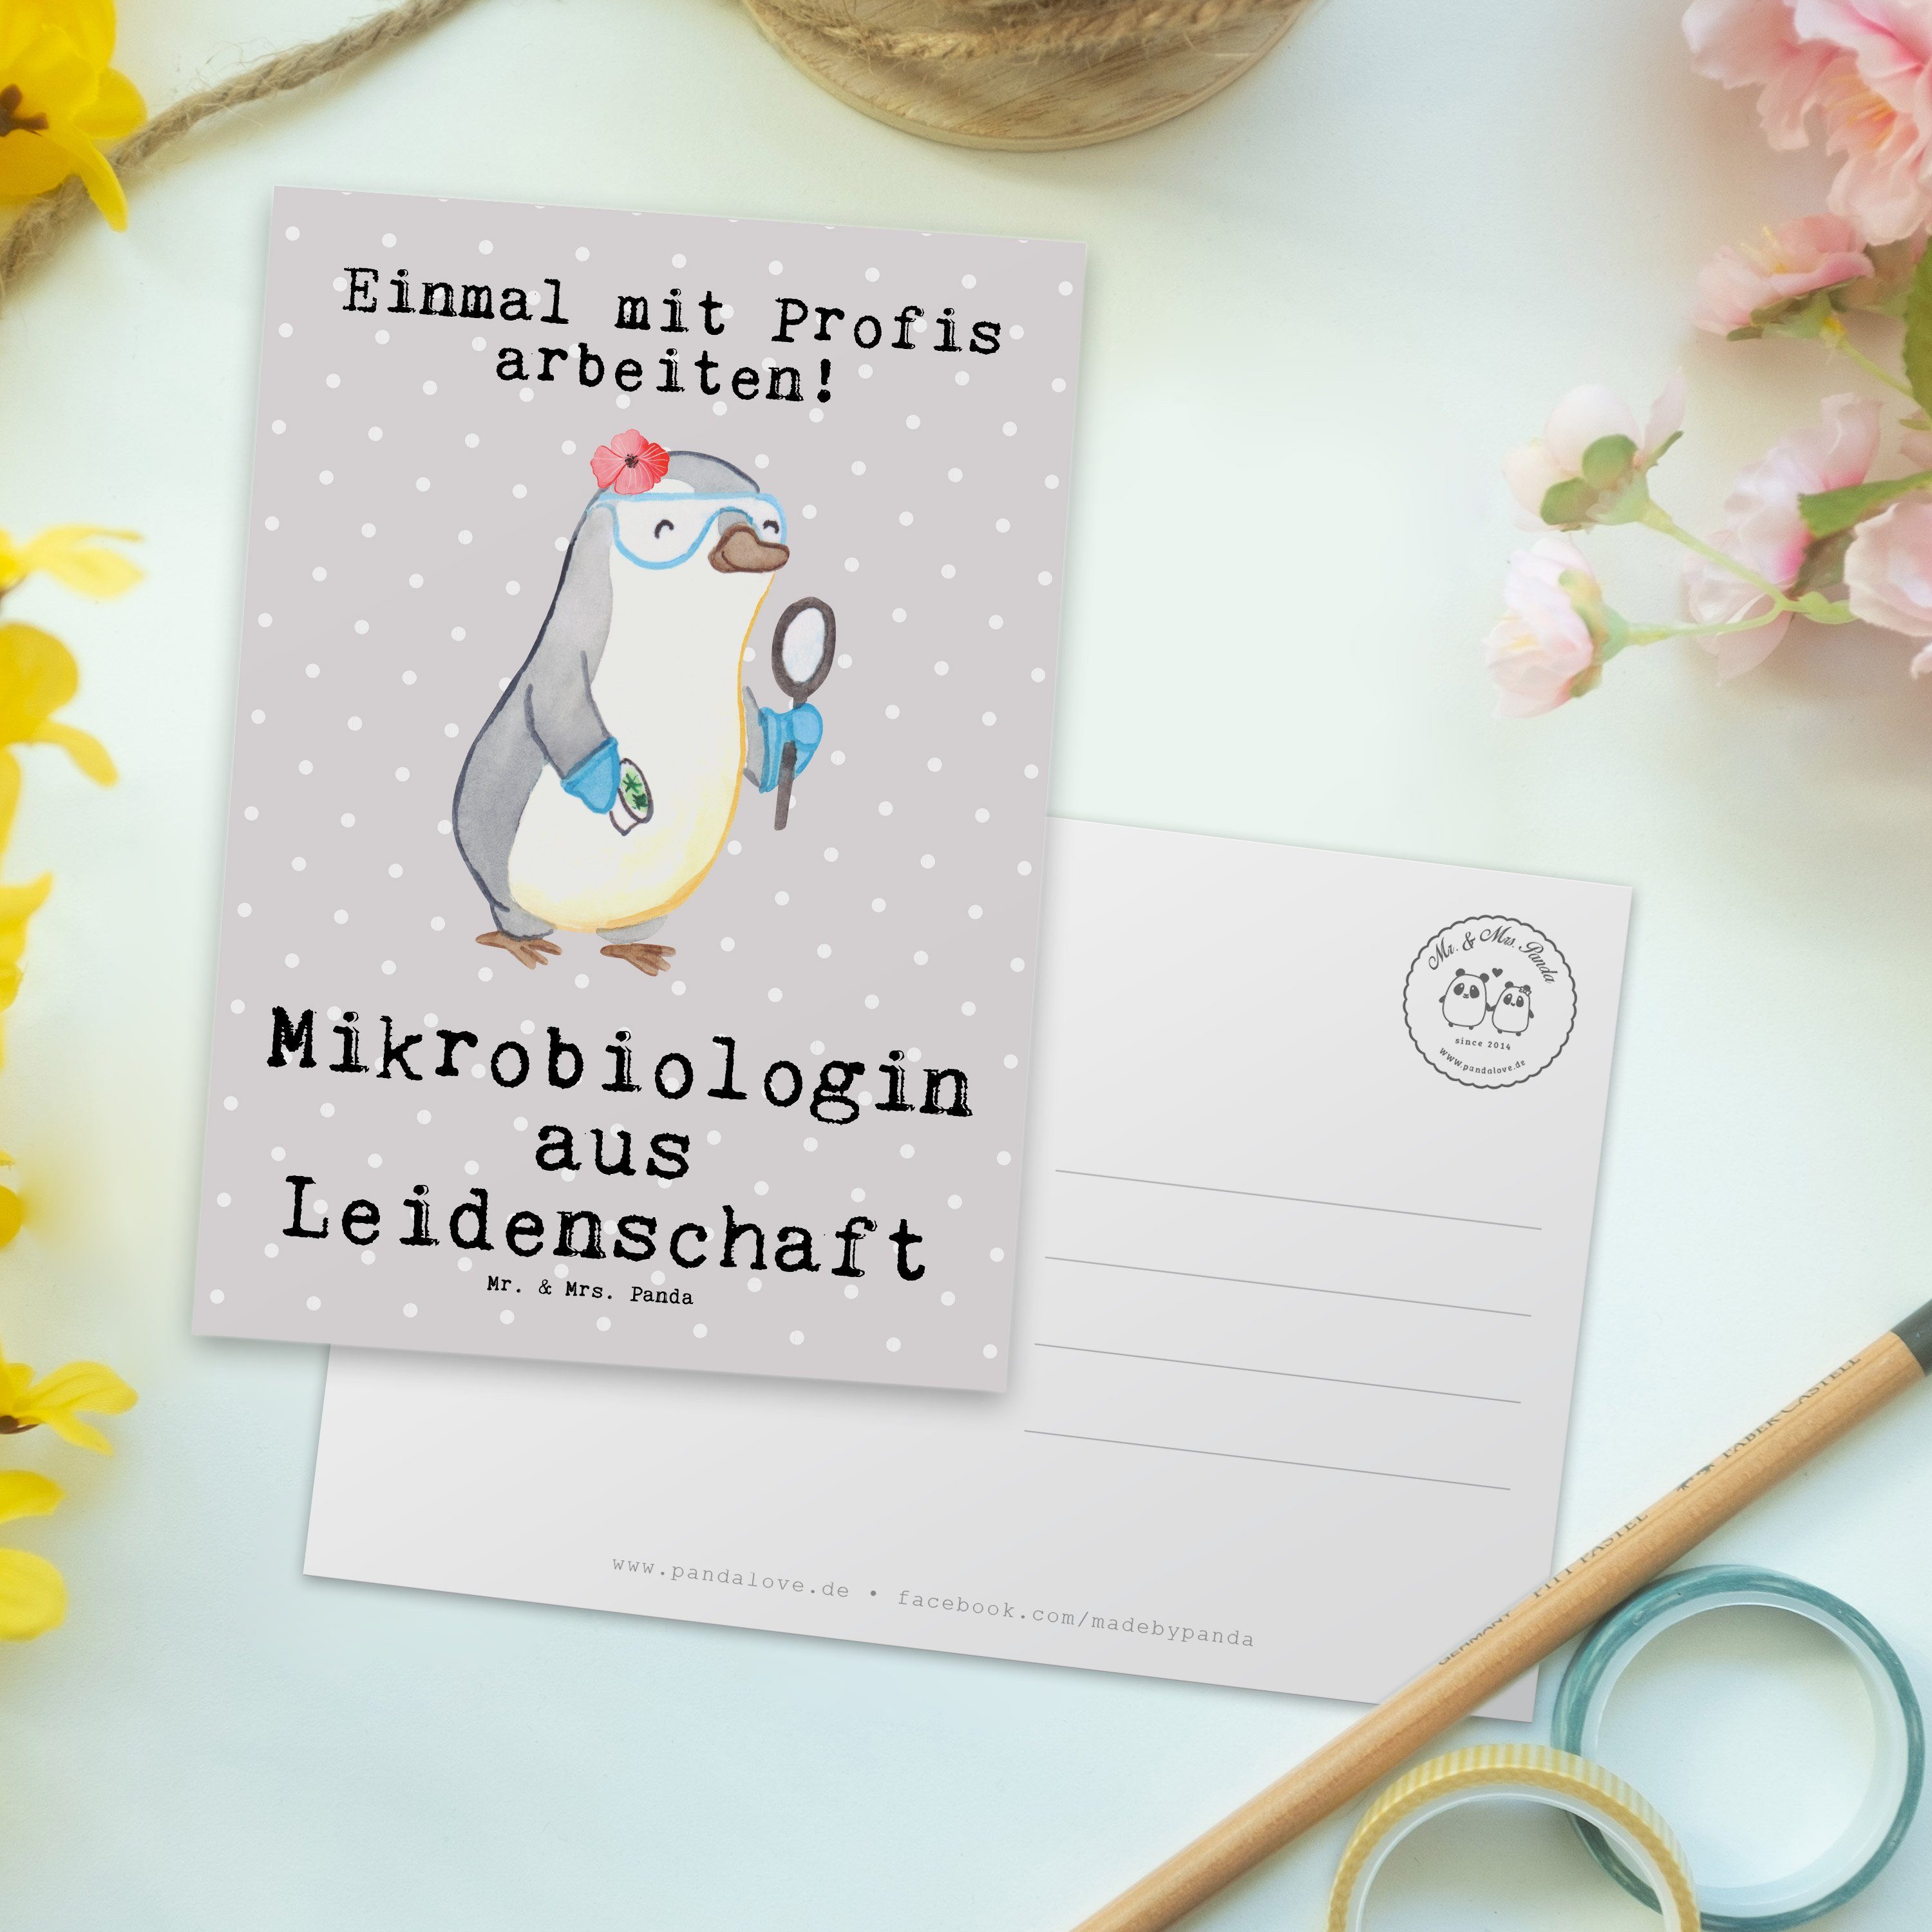 Mr. & Panda aus Mrs. - Pastell Naturwissen Mikrobiologin Geschenk, Grau Leidenschaft - Postkarte